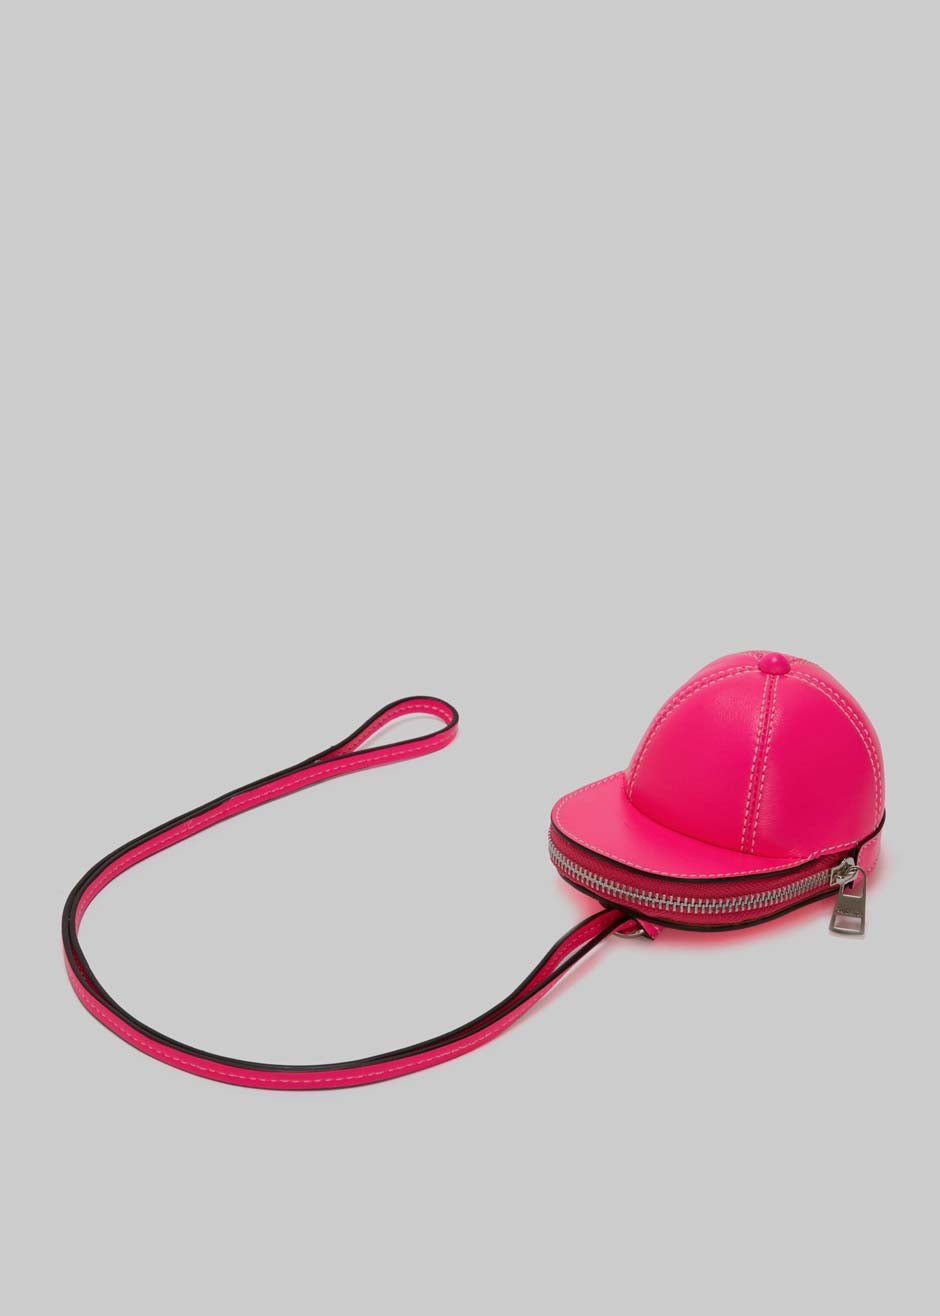 JW Anderson Nano Cap Bag - Neon Pink